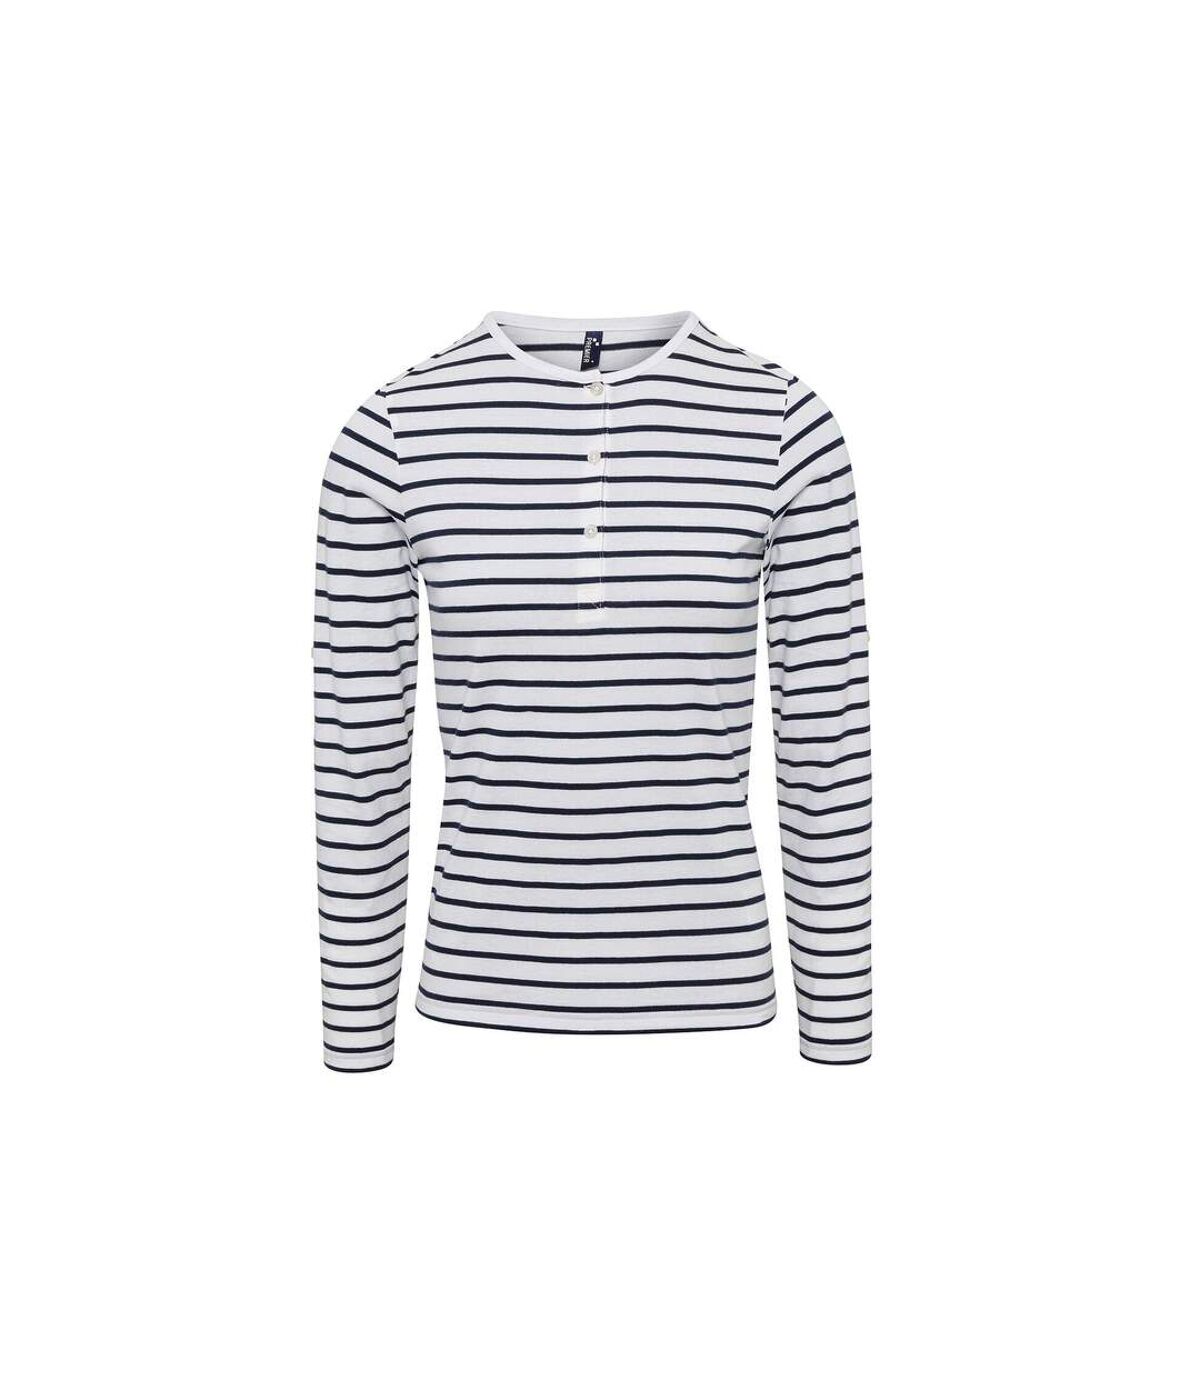 Premier - T-shirt LONG JOHN - Femme (Blanc / bleu marine) - UTRW6236